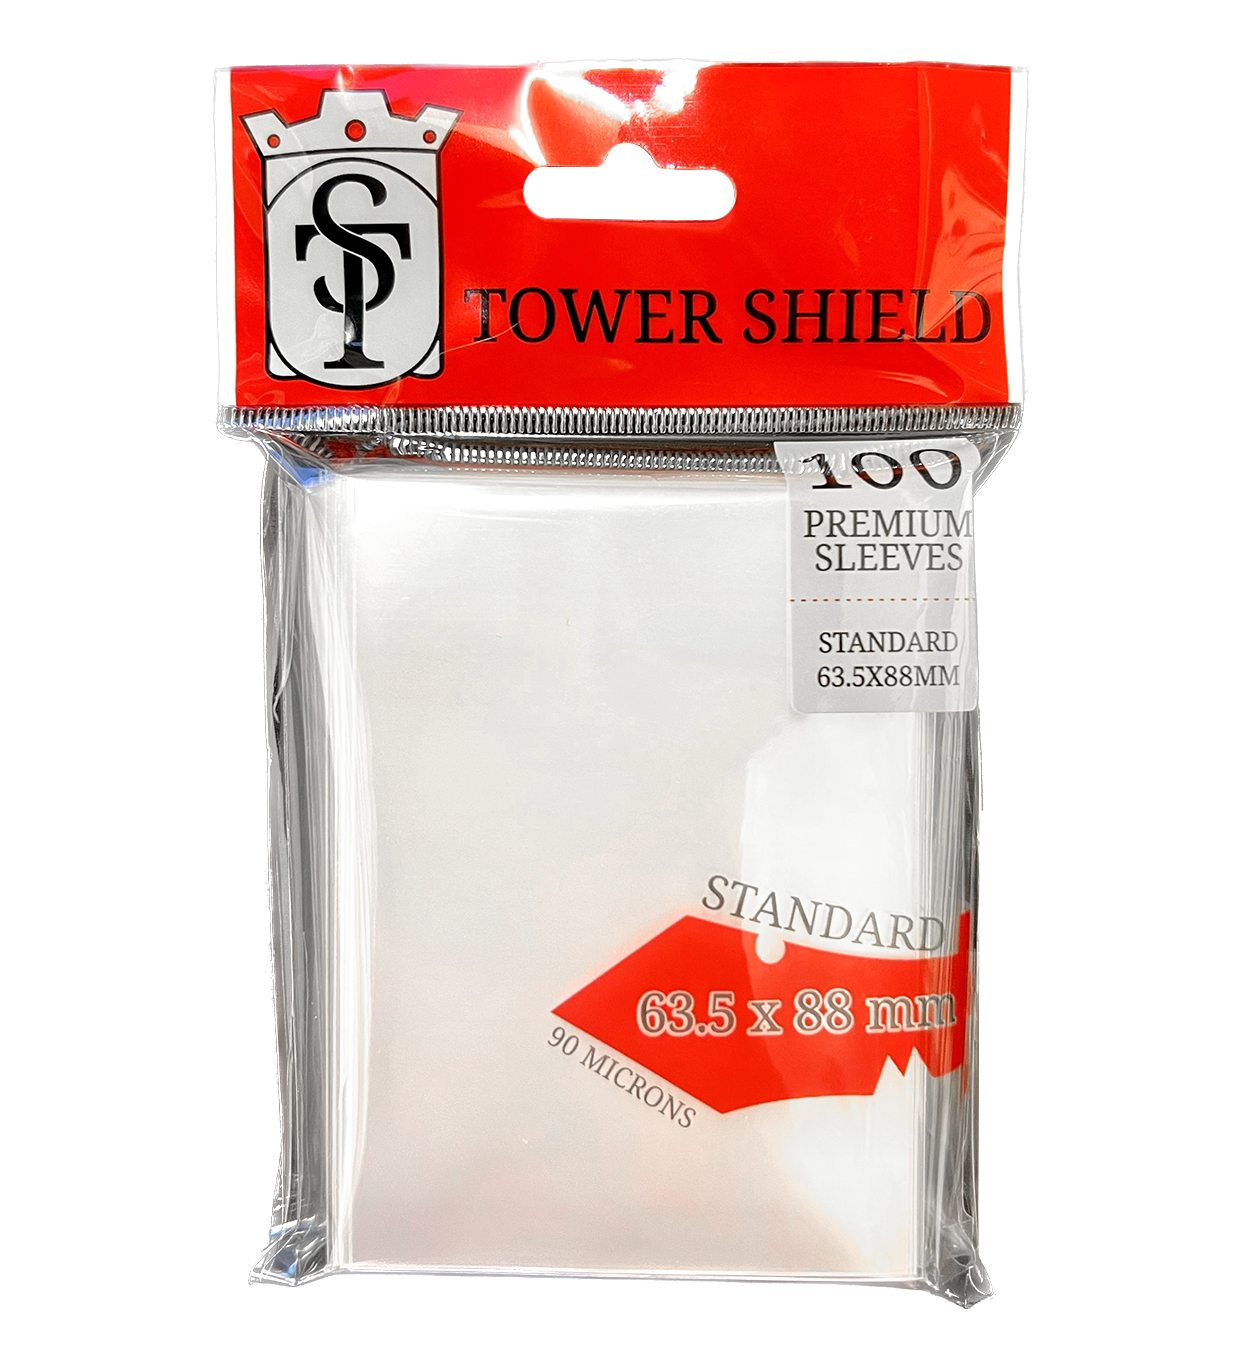 Tower Shield: Premium korttisuojat (100kpl)